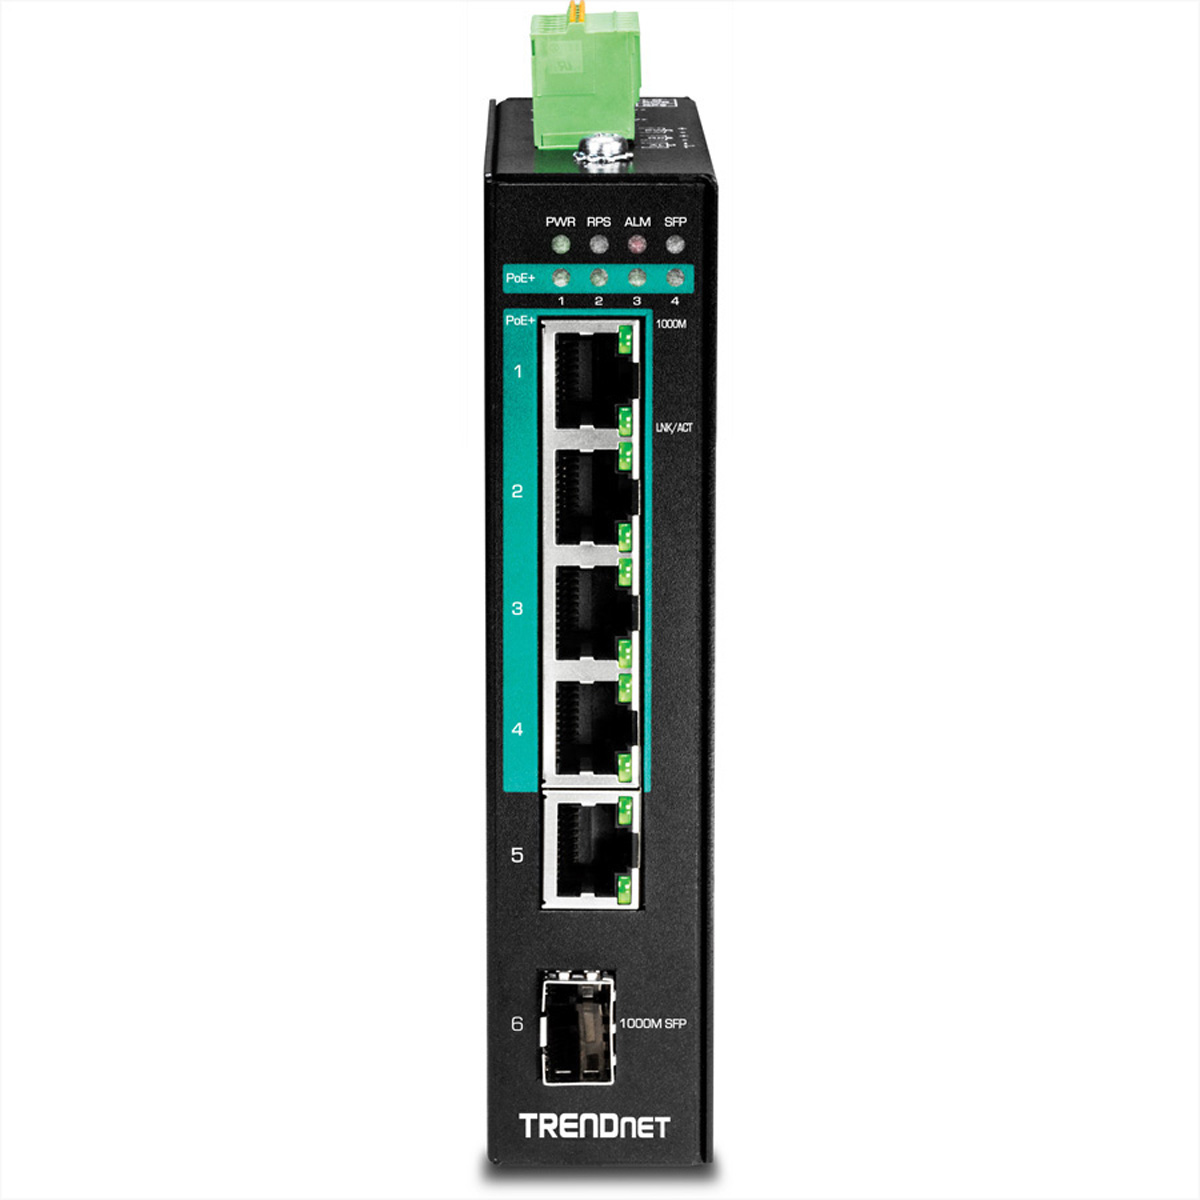 TRENDNET 2 Layer TI-PG541i 6-Port DIN-Rail Gigabit Industrial PoE+ PoE Switch Switch Gigabit